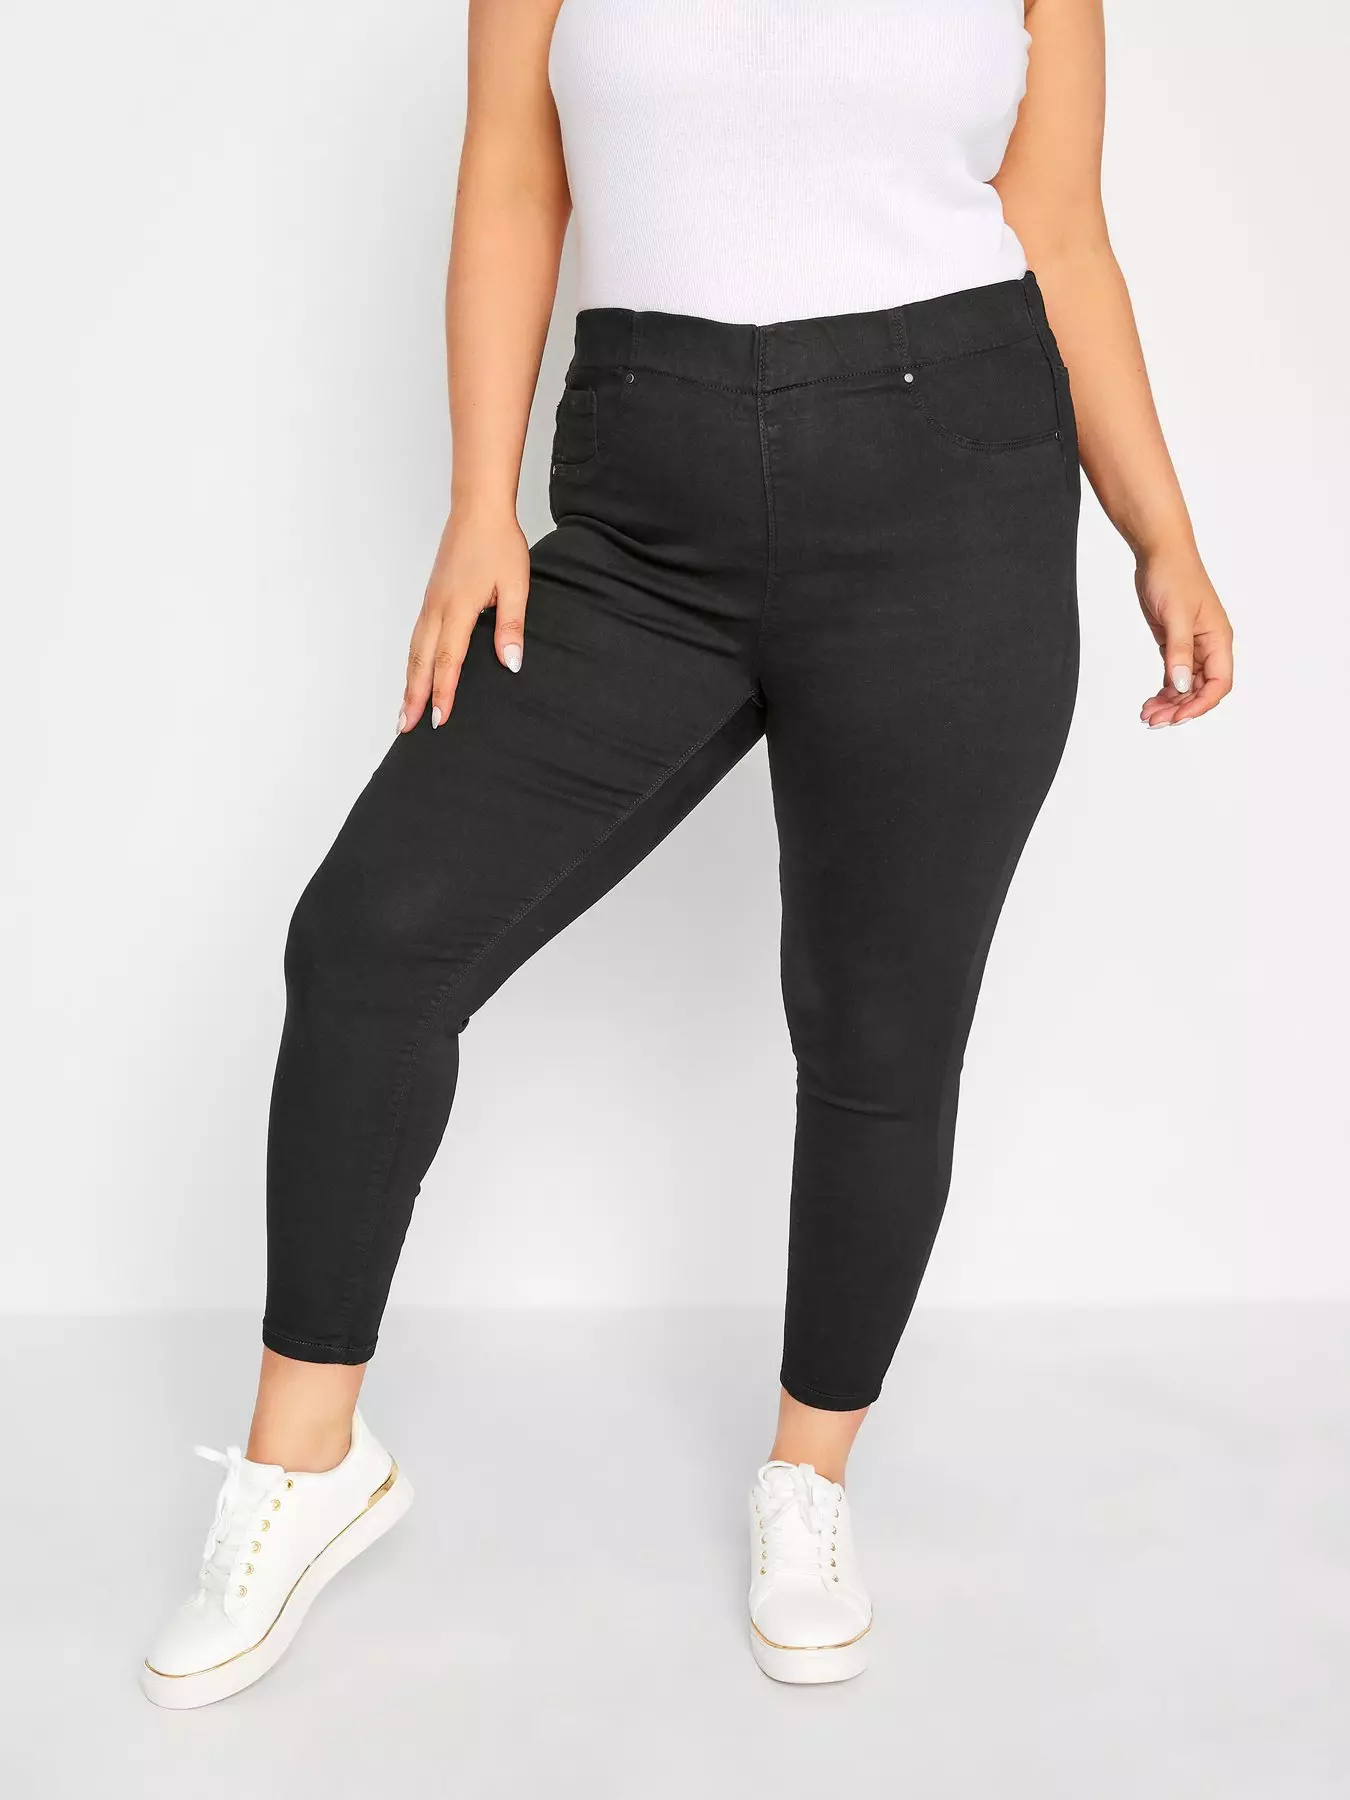 Buy Black Jeans & Jeggings for Women by Albion Online